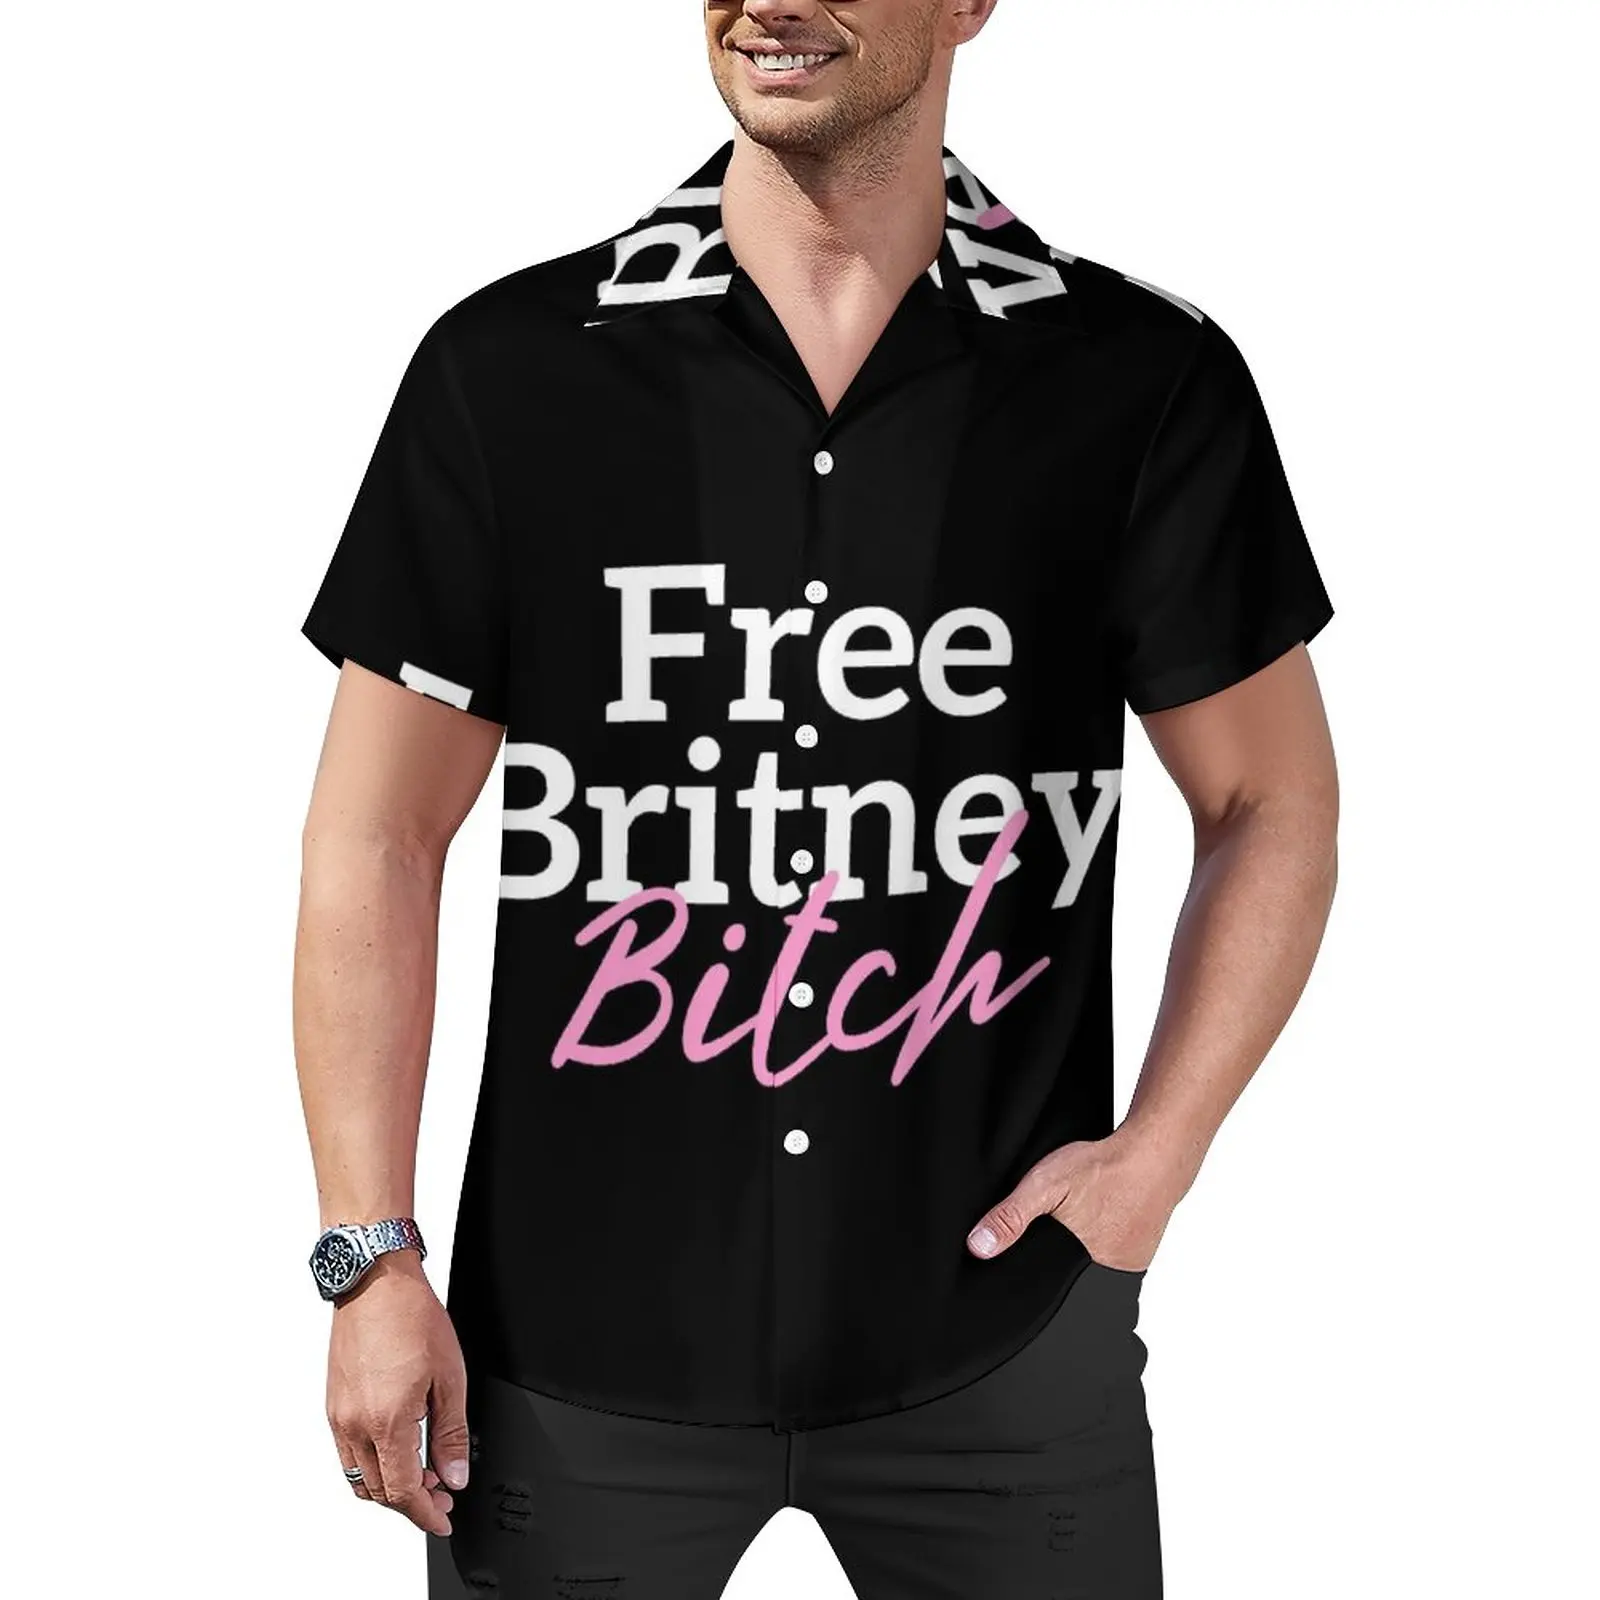 

Free Britney Graffiti Beach Shirt Freedom Hawaiian Casual Shirts Man Trendy Blouses Short Sleeve Graphic Tops Plus Size 3XL 4XL